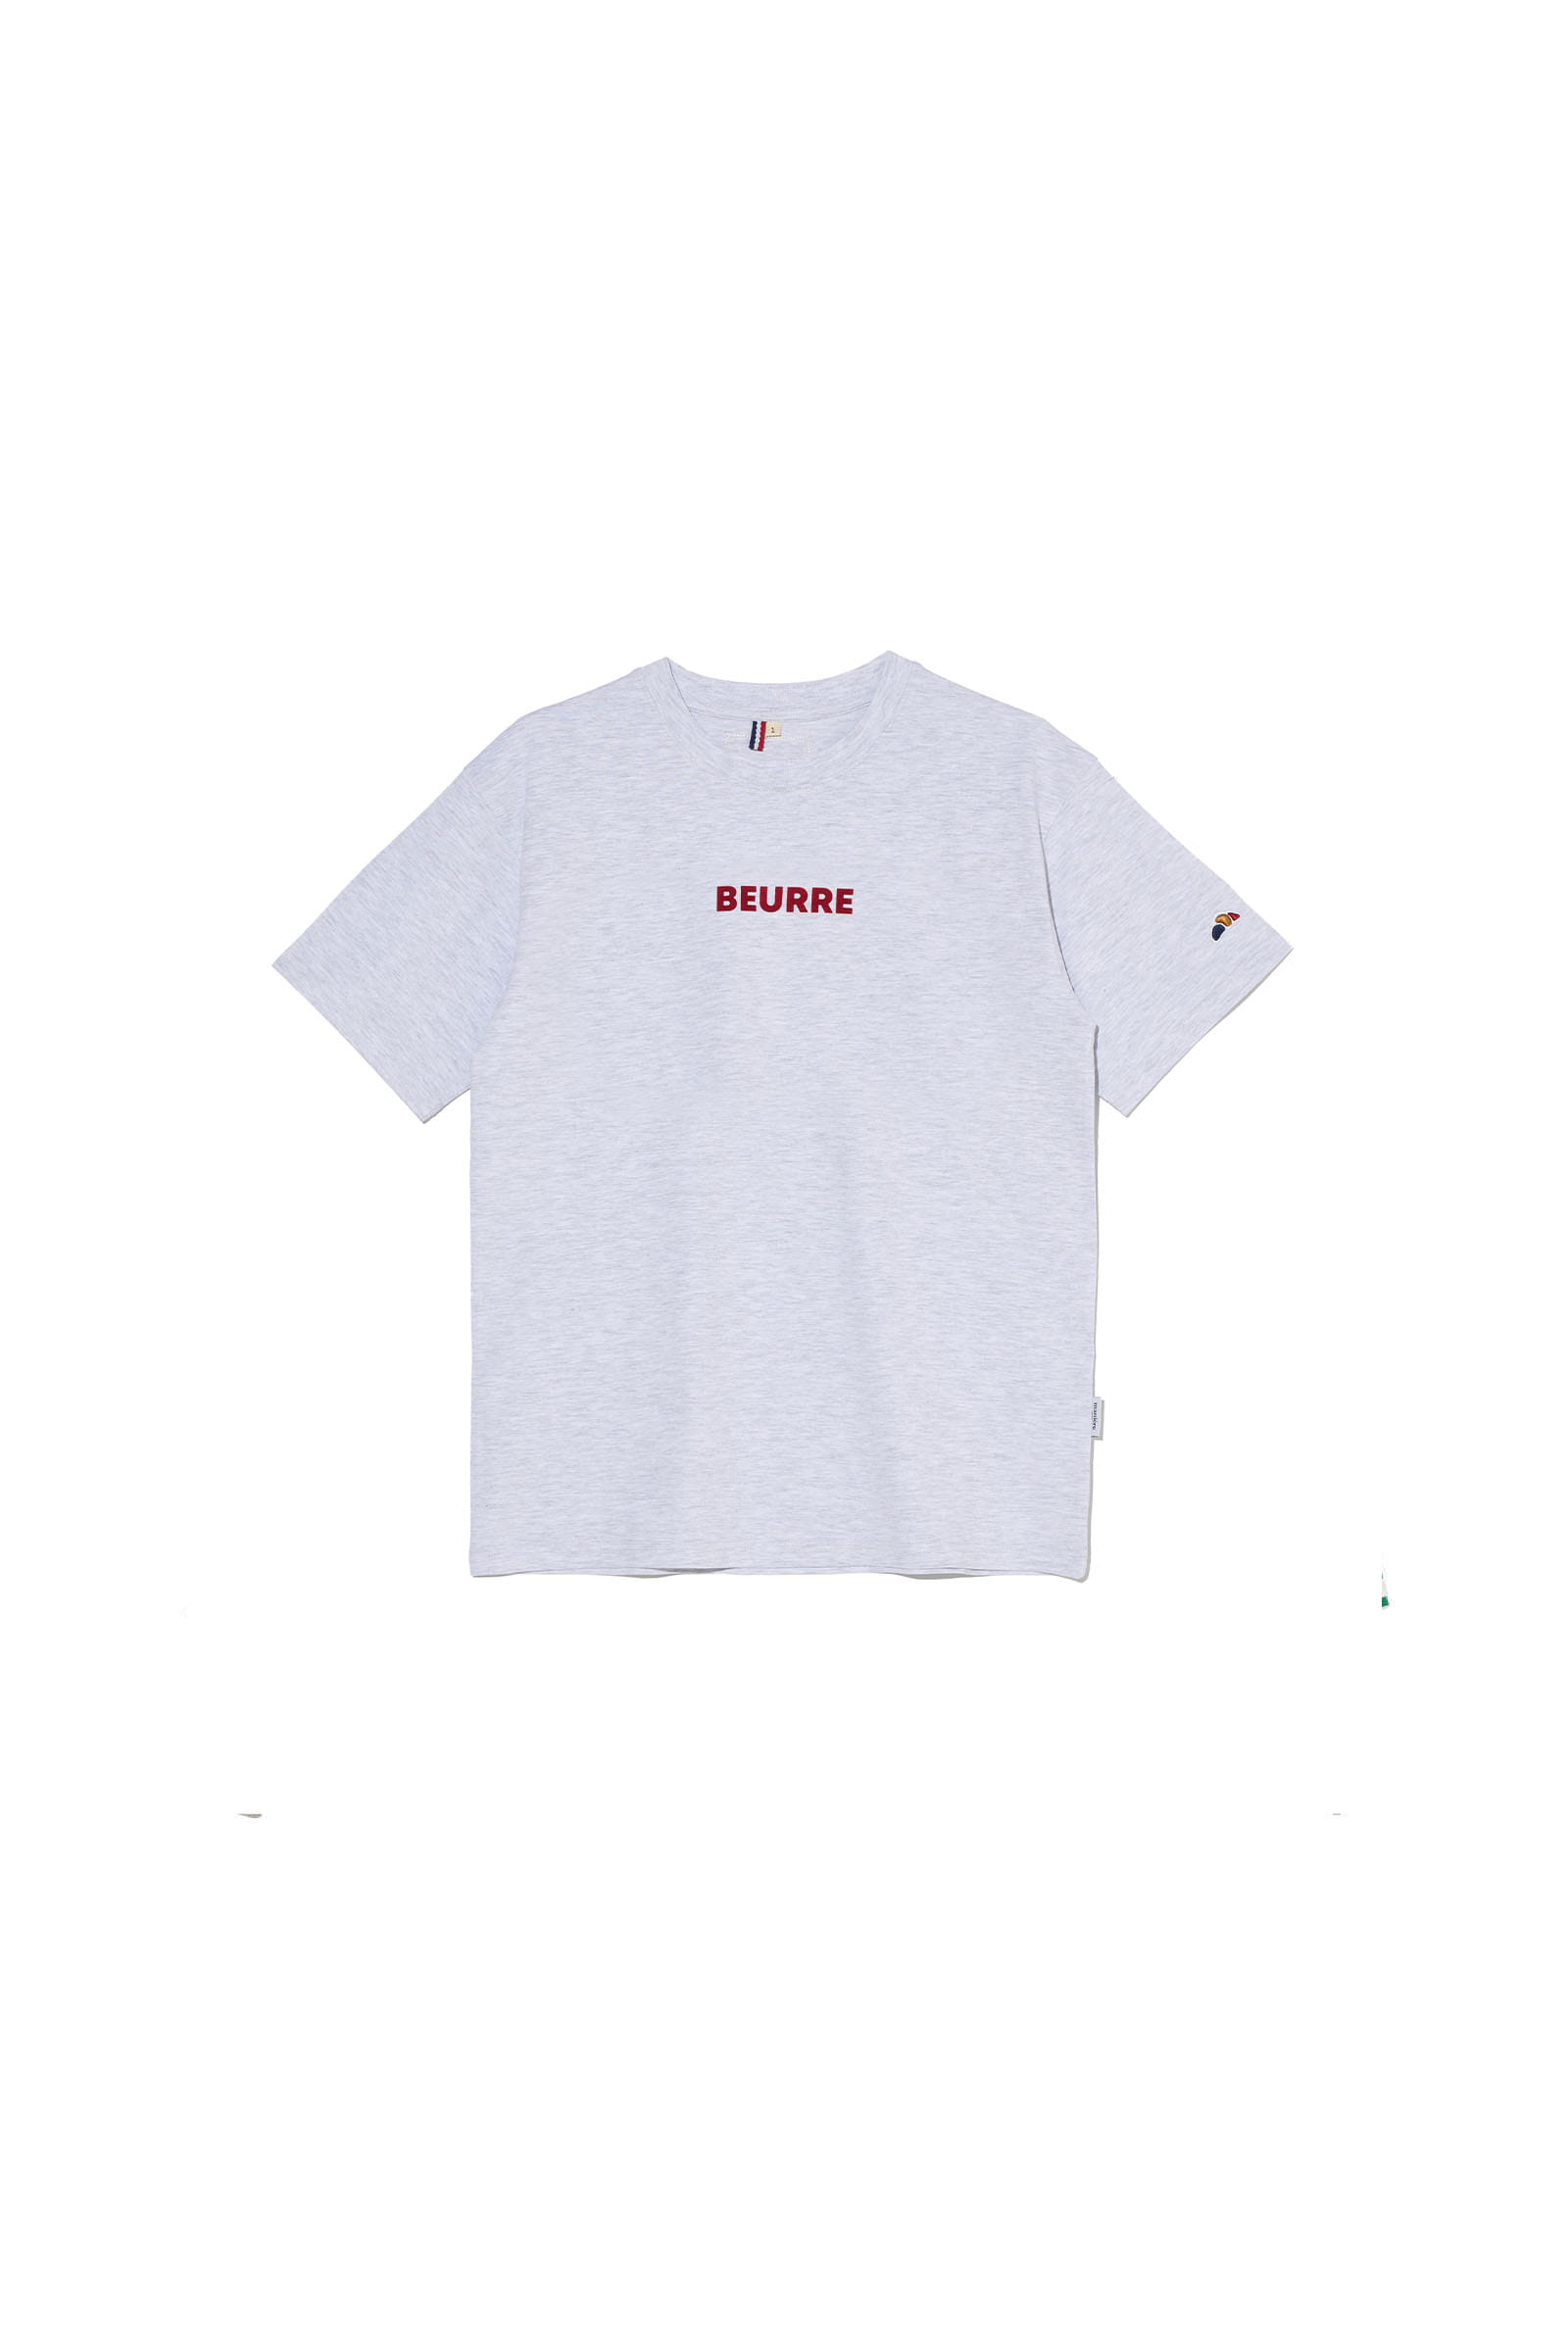 ep.6 BEURRE Mini T-shirts (Cool gray)